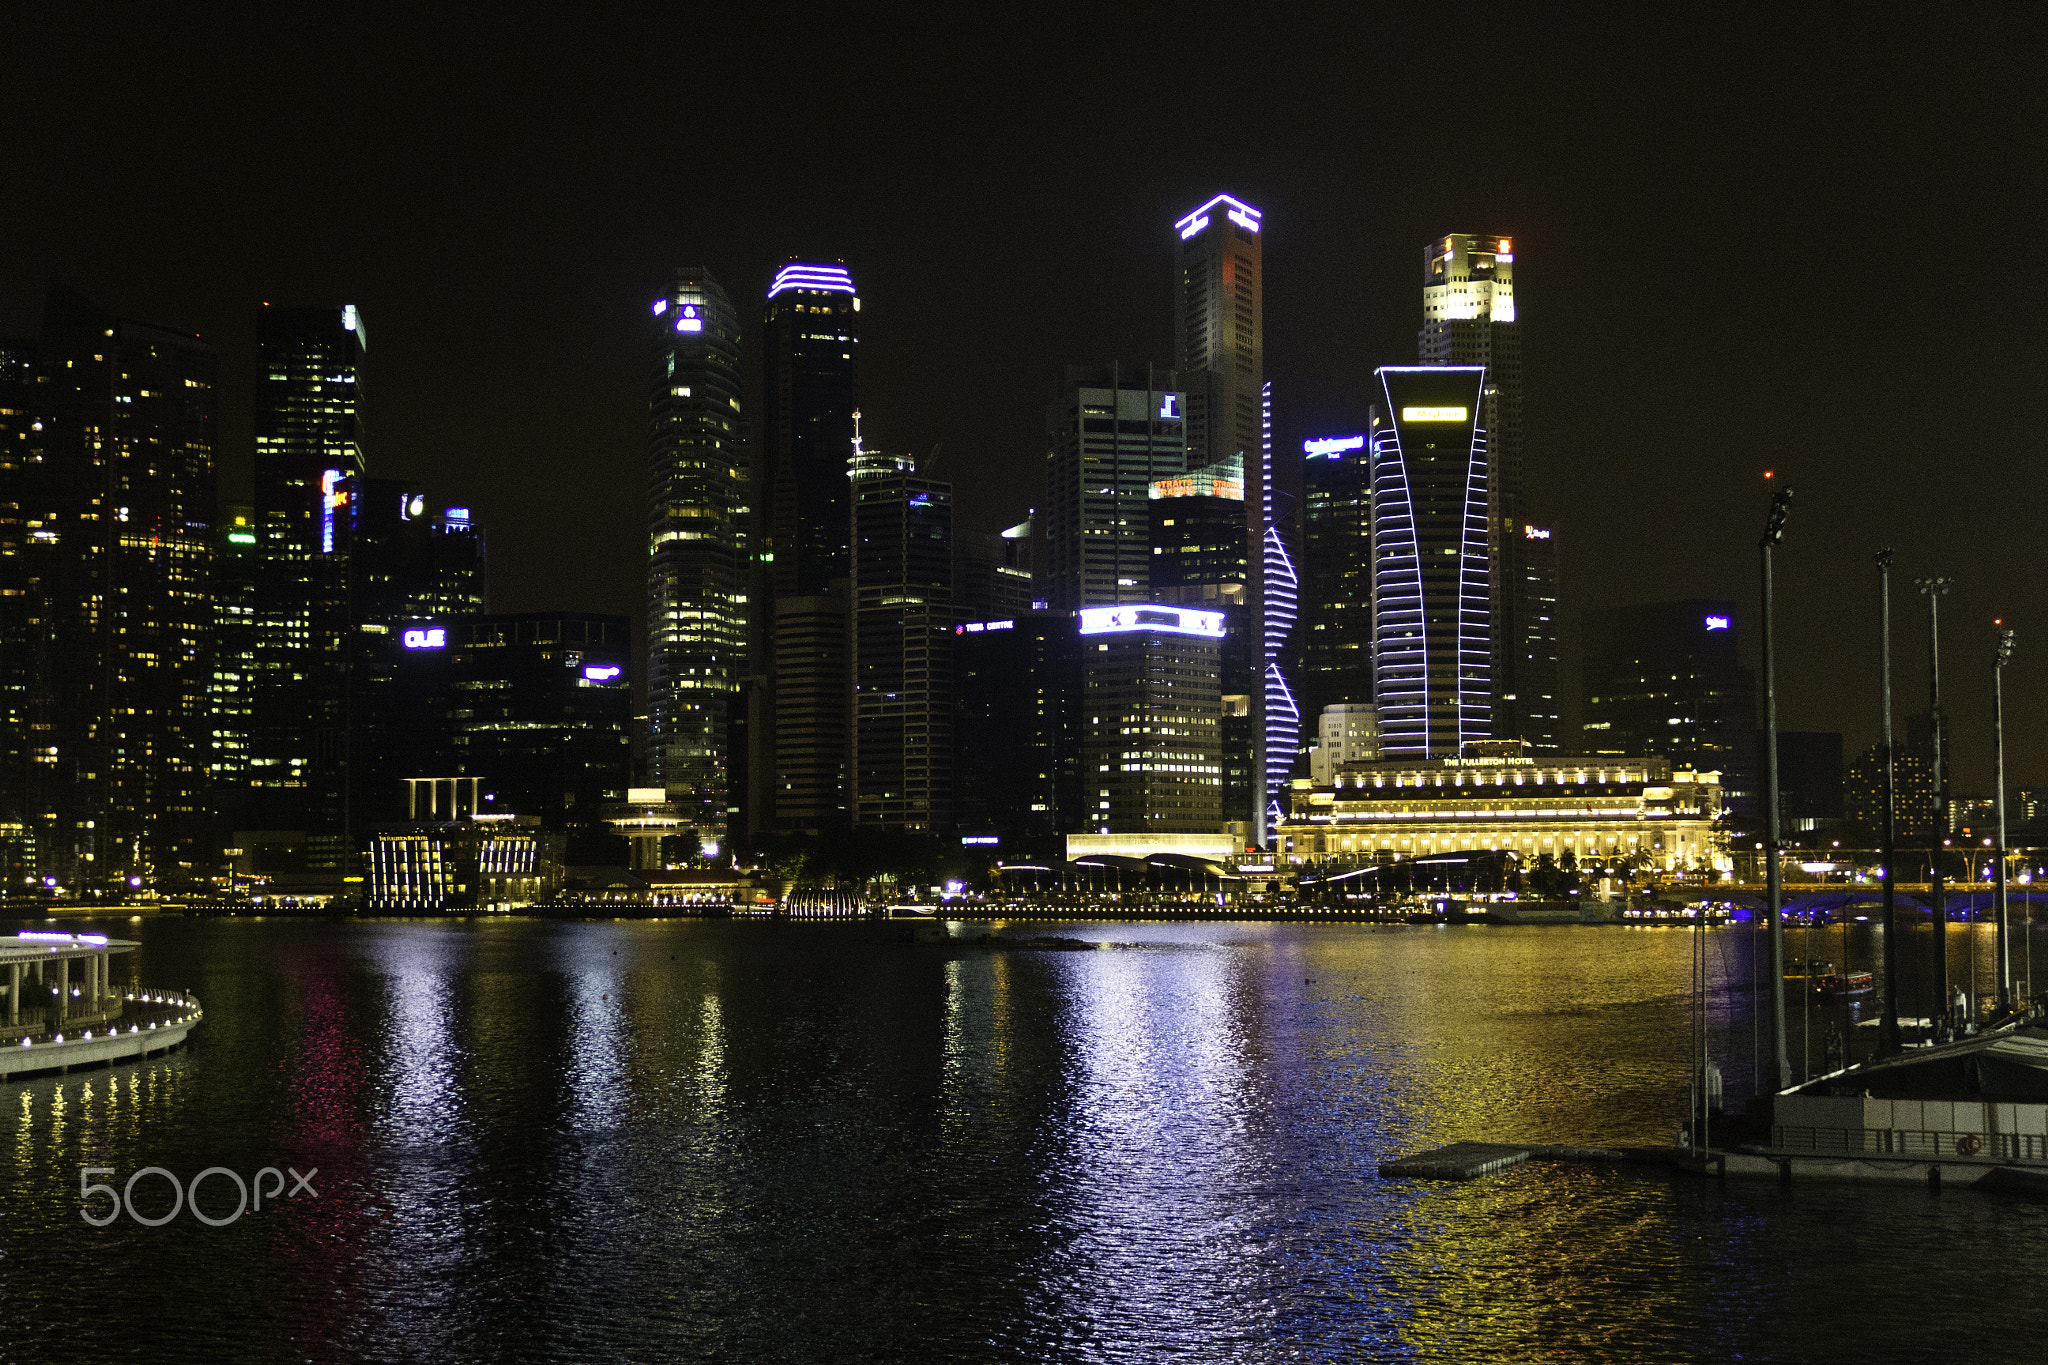 Singapore skyline as seen from the pedestrian bridge near the Ma